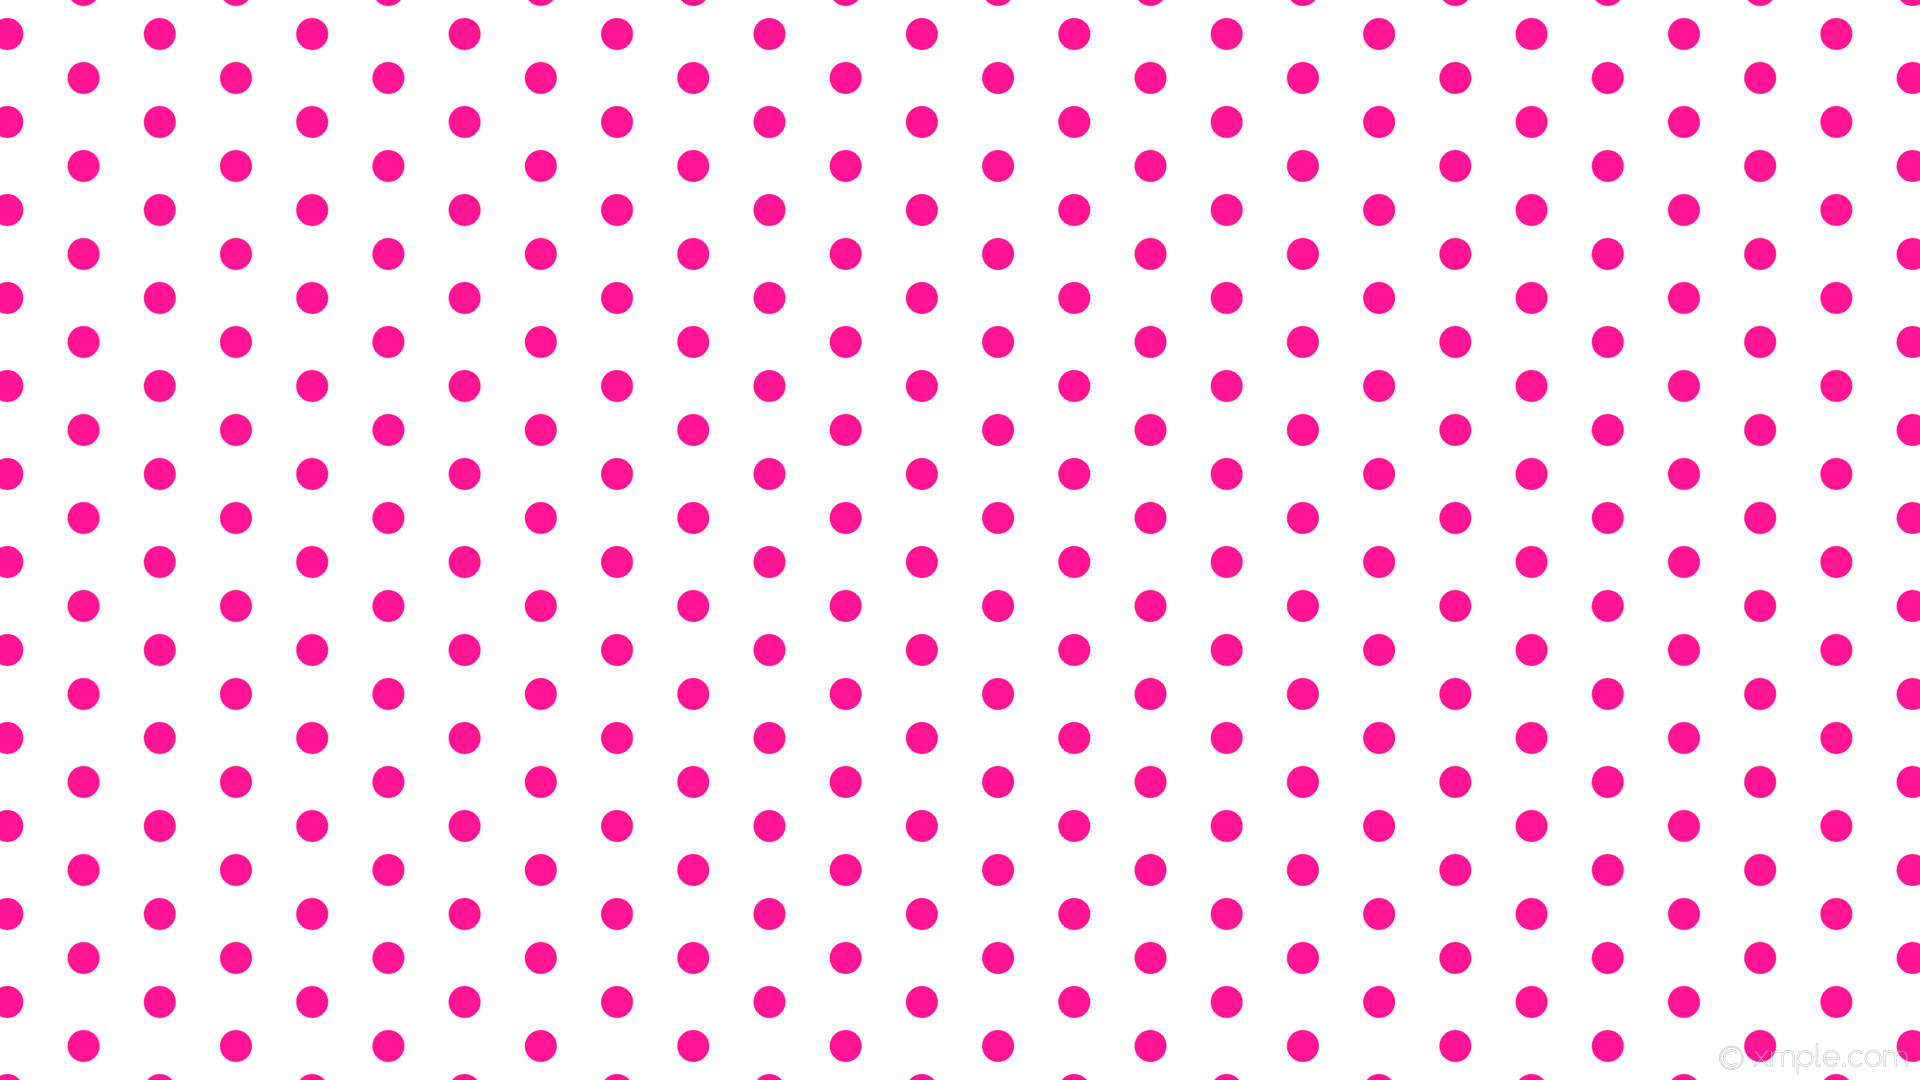 Pink Polka Dot Wallpaper 77 Images